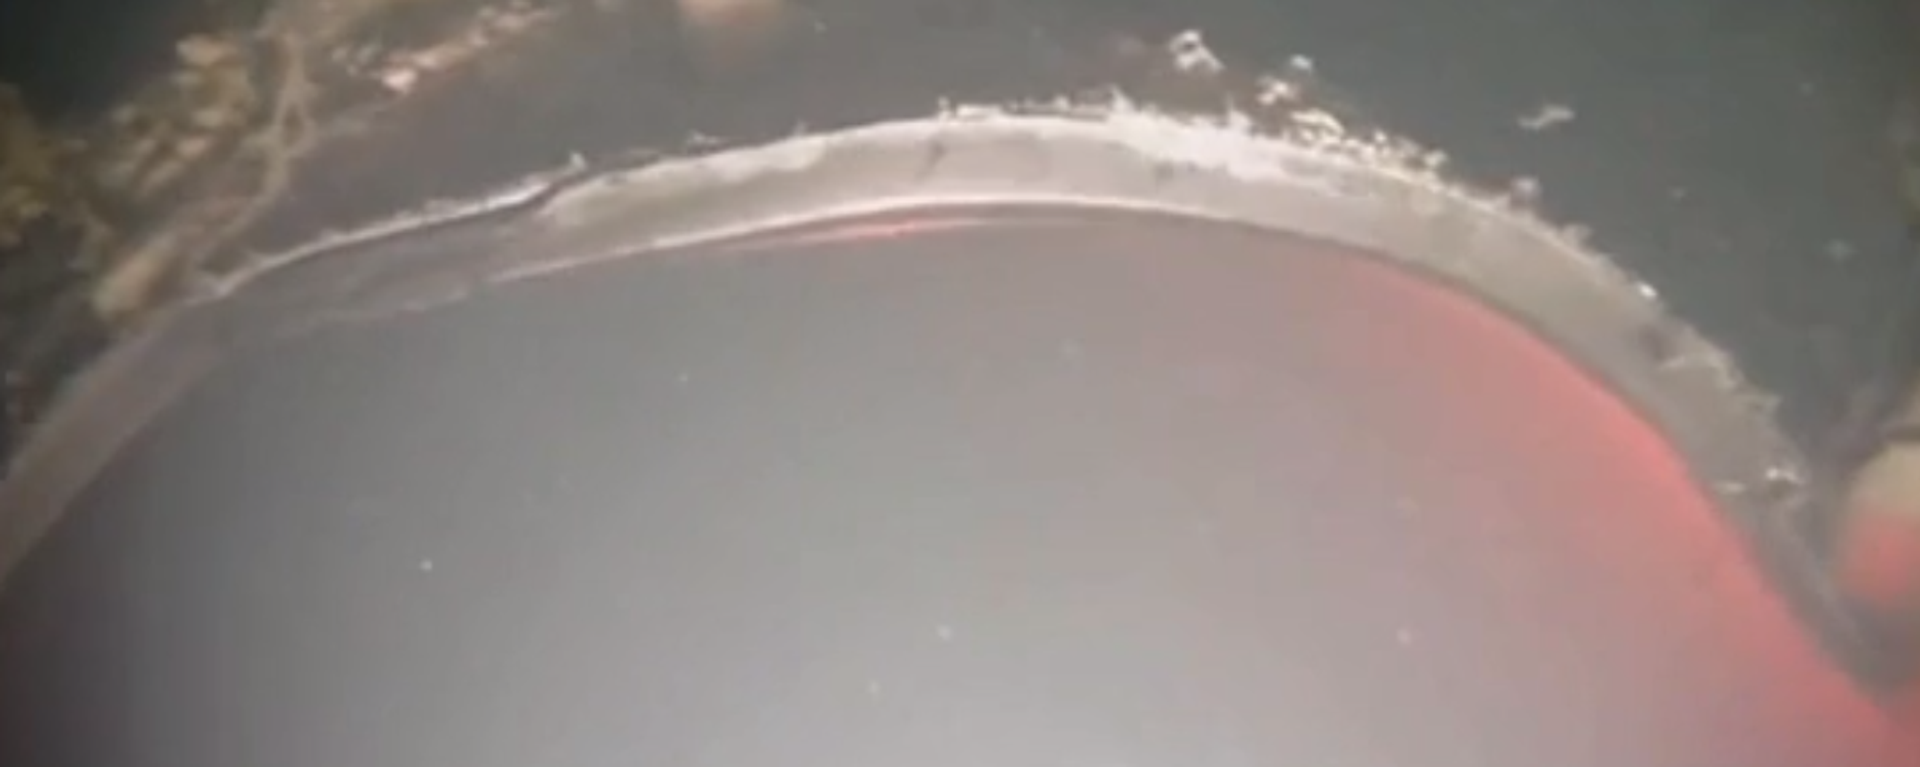 Screengrab of video by Swedish media showing underwater drone footage of damaged Nord Stream pipeline. - Sputnik International, 1920, 24.03.2023